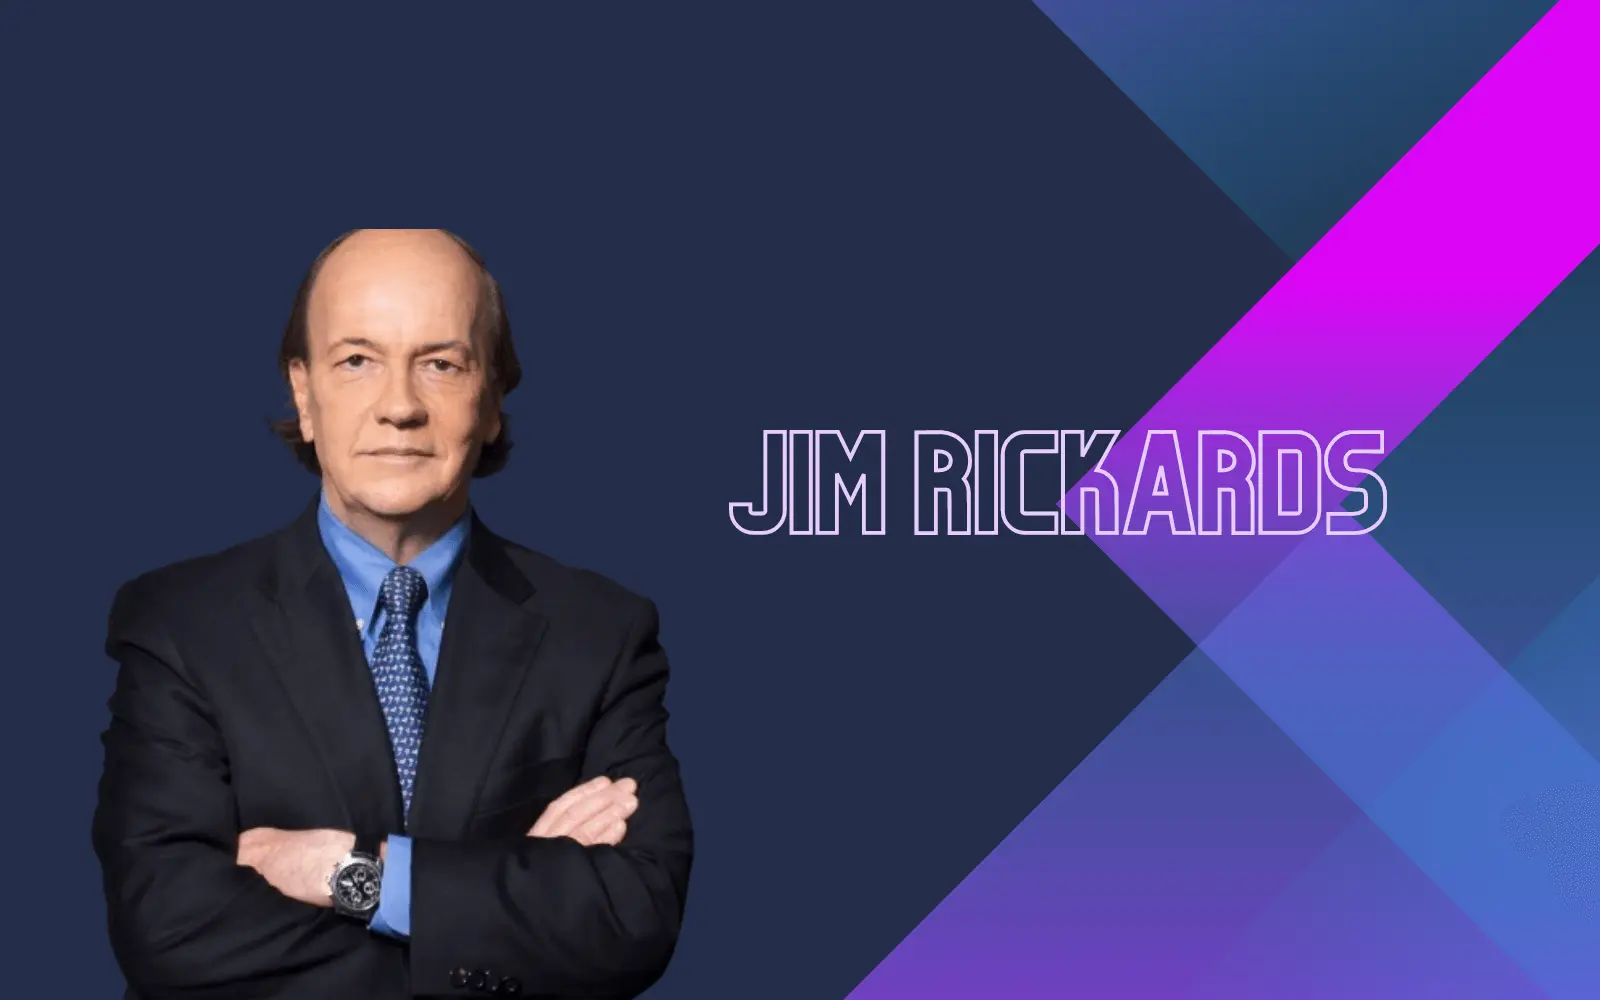 Jim Rickards Net Worth